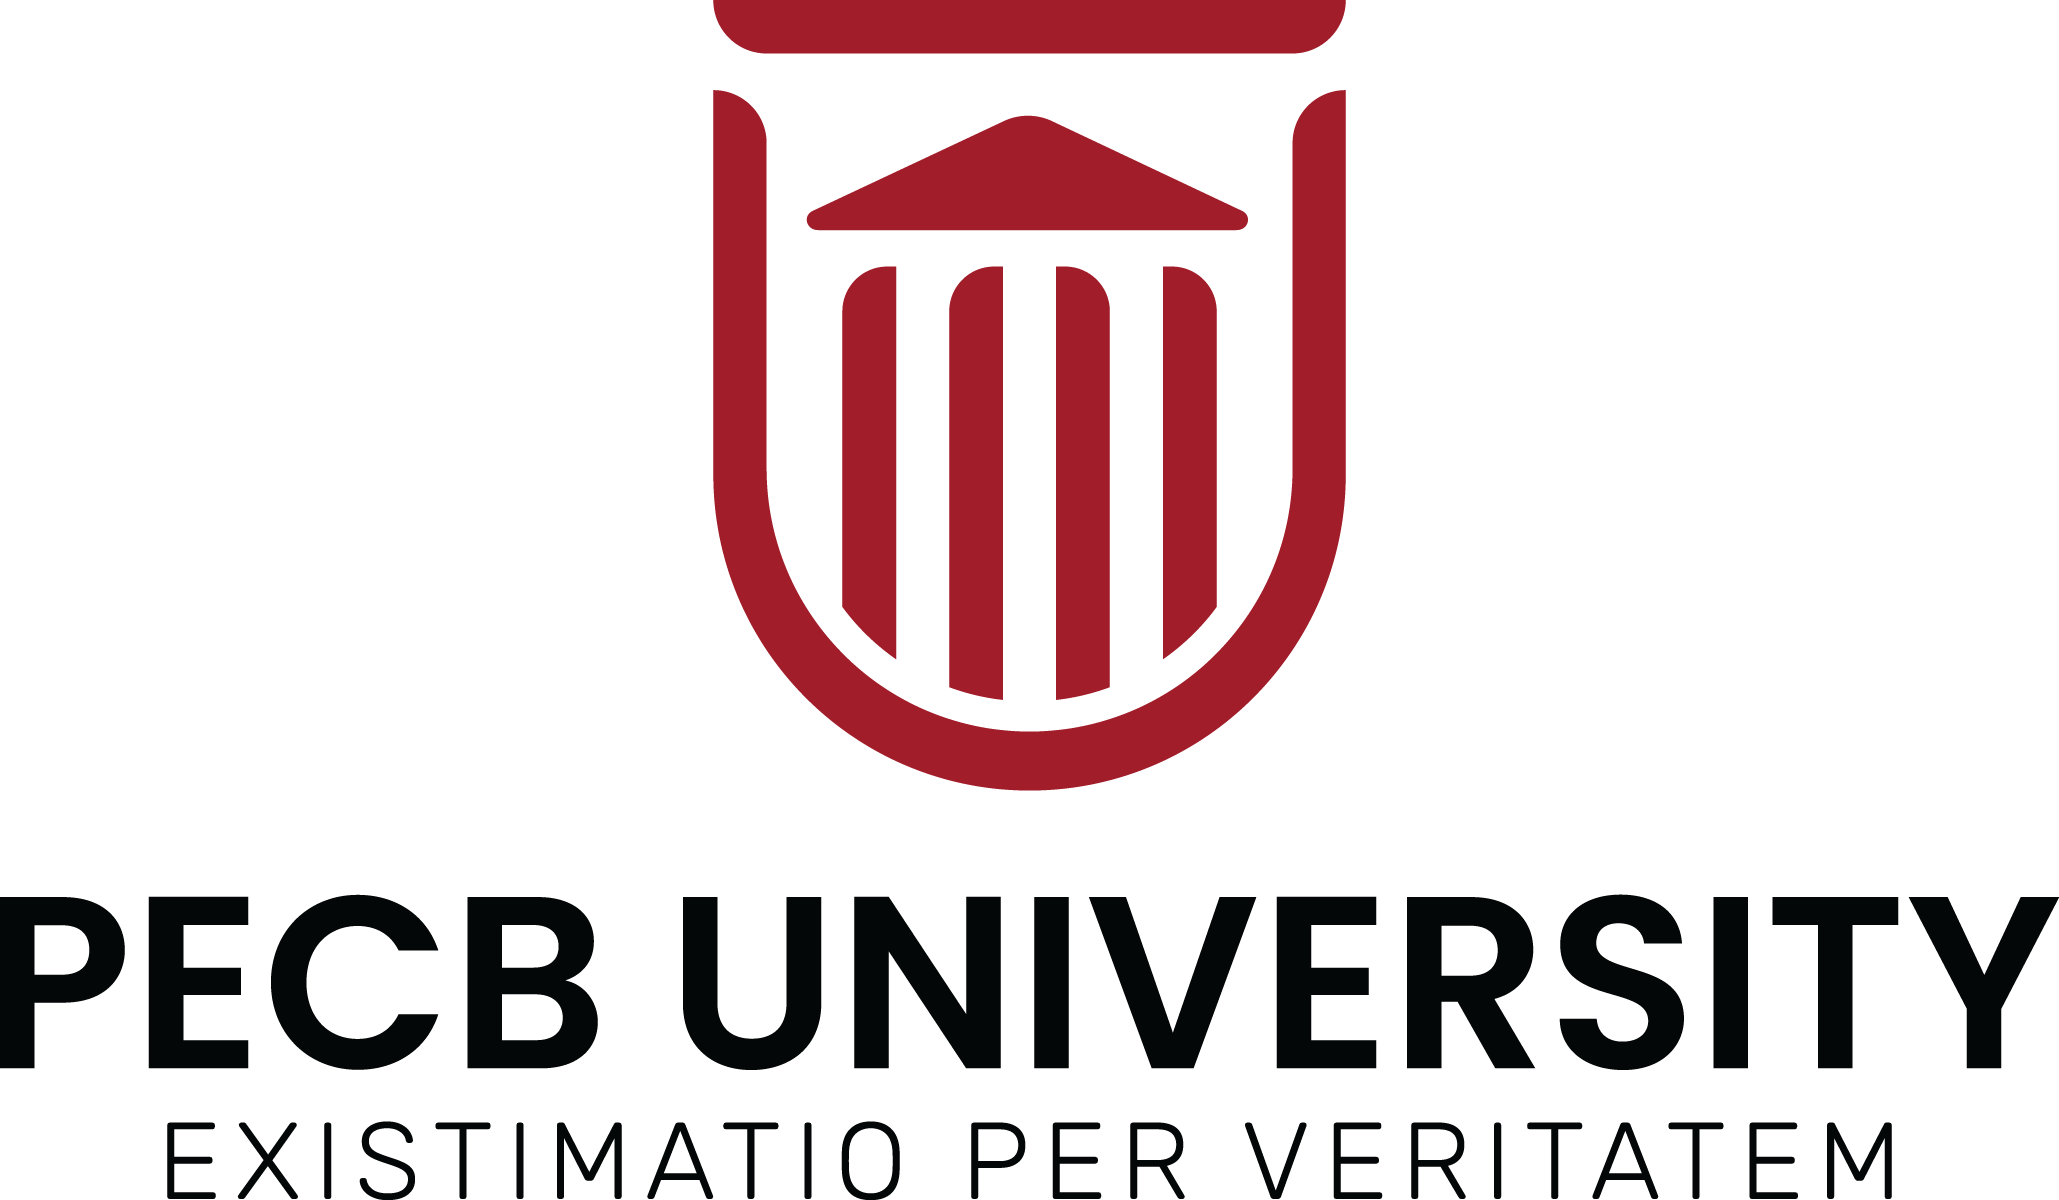 Pecb university logo